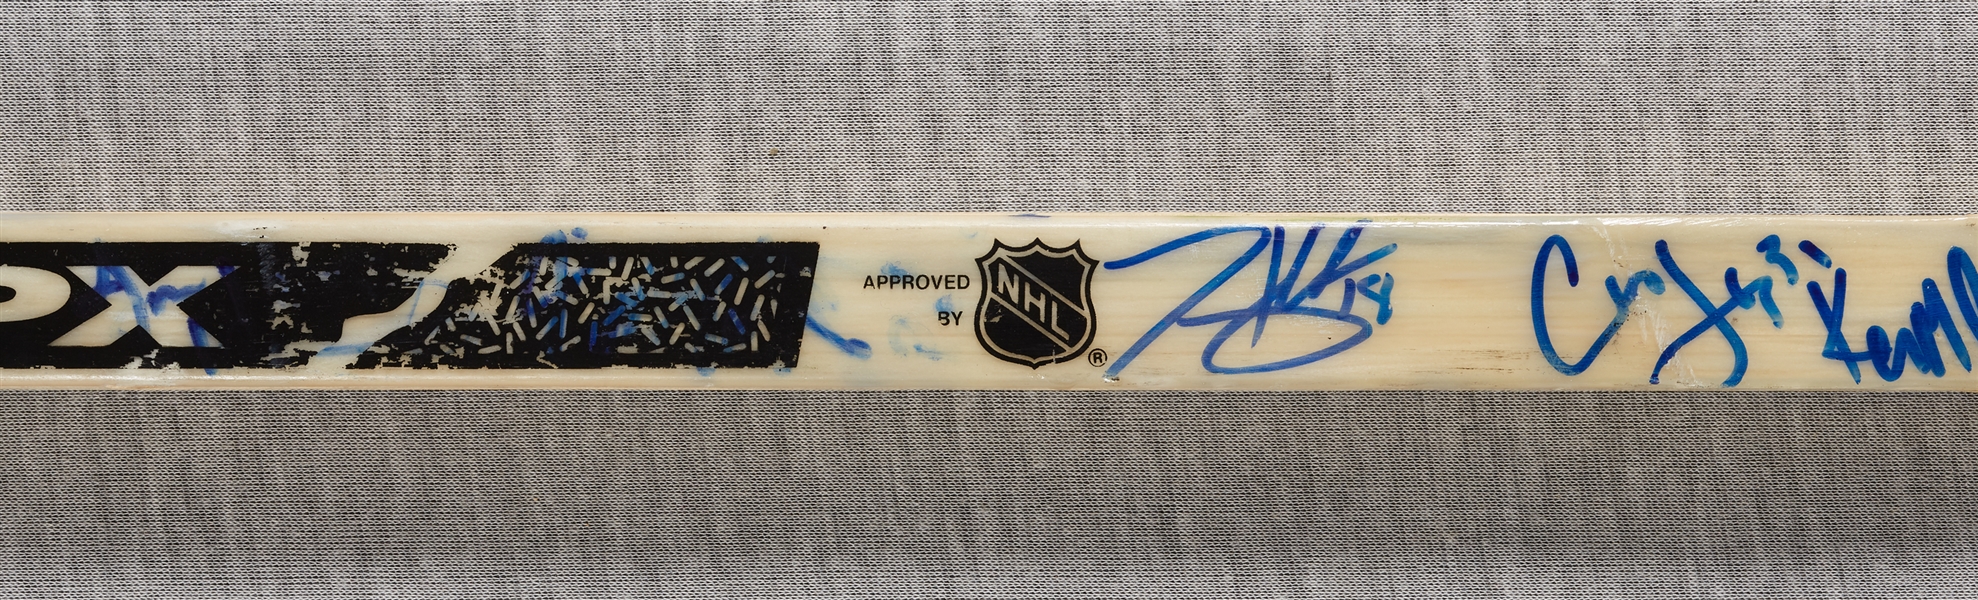 1994-95 St. Louis Blues Team-Signed Rob Ray Hockey Stick (20)